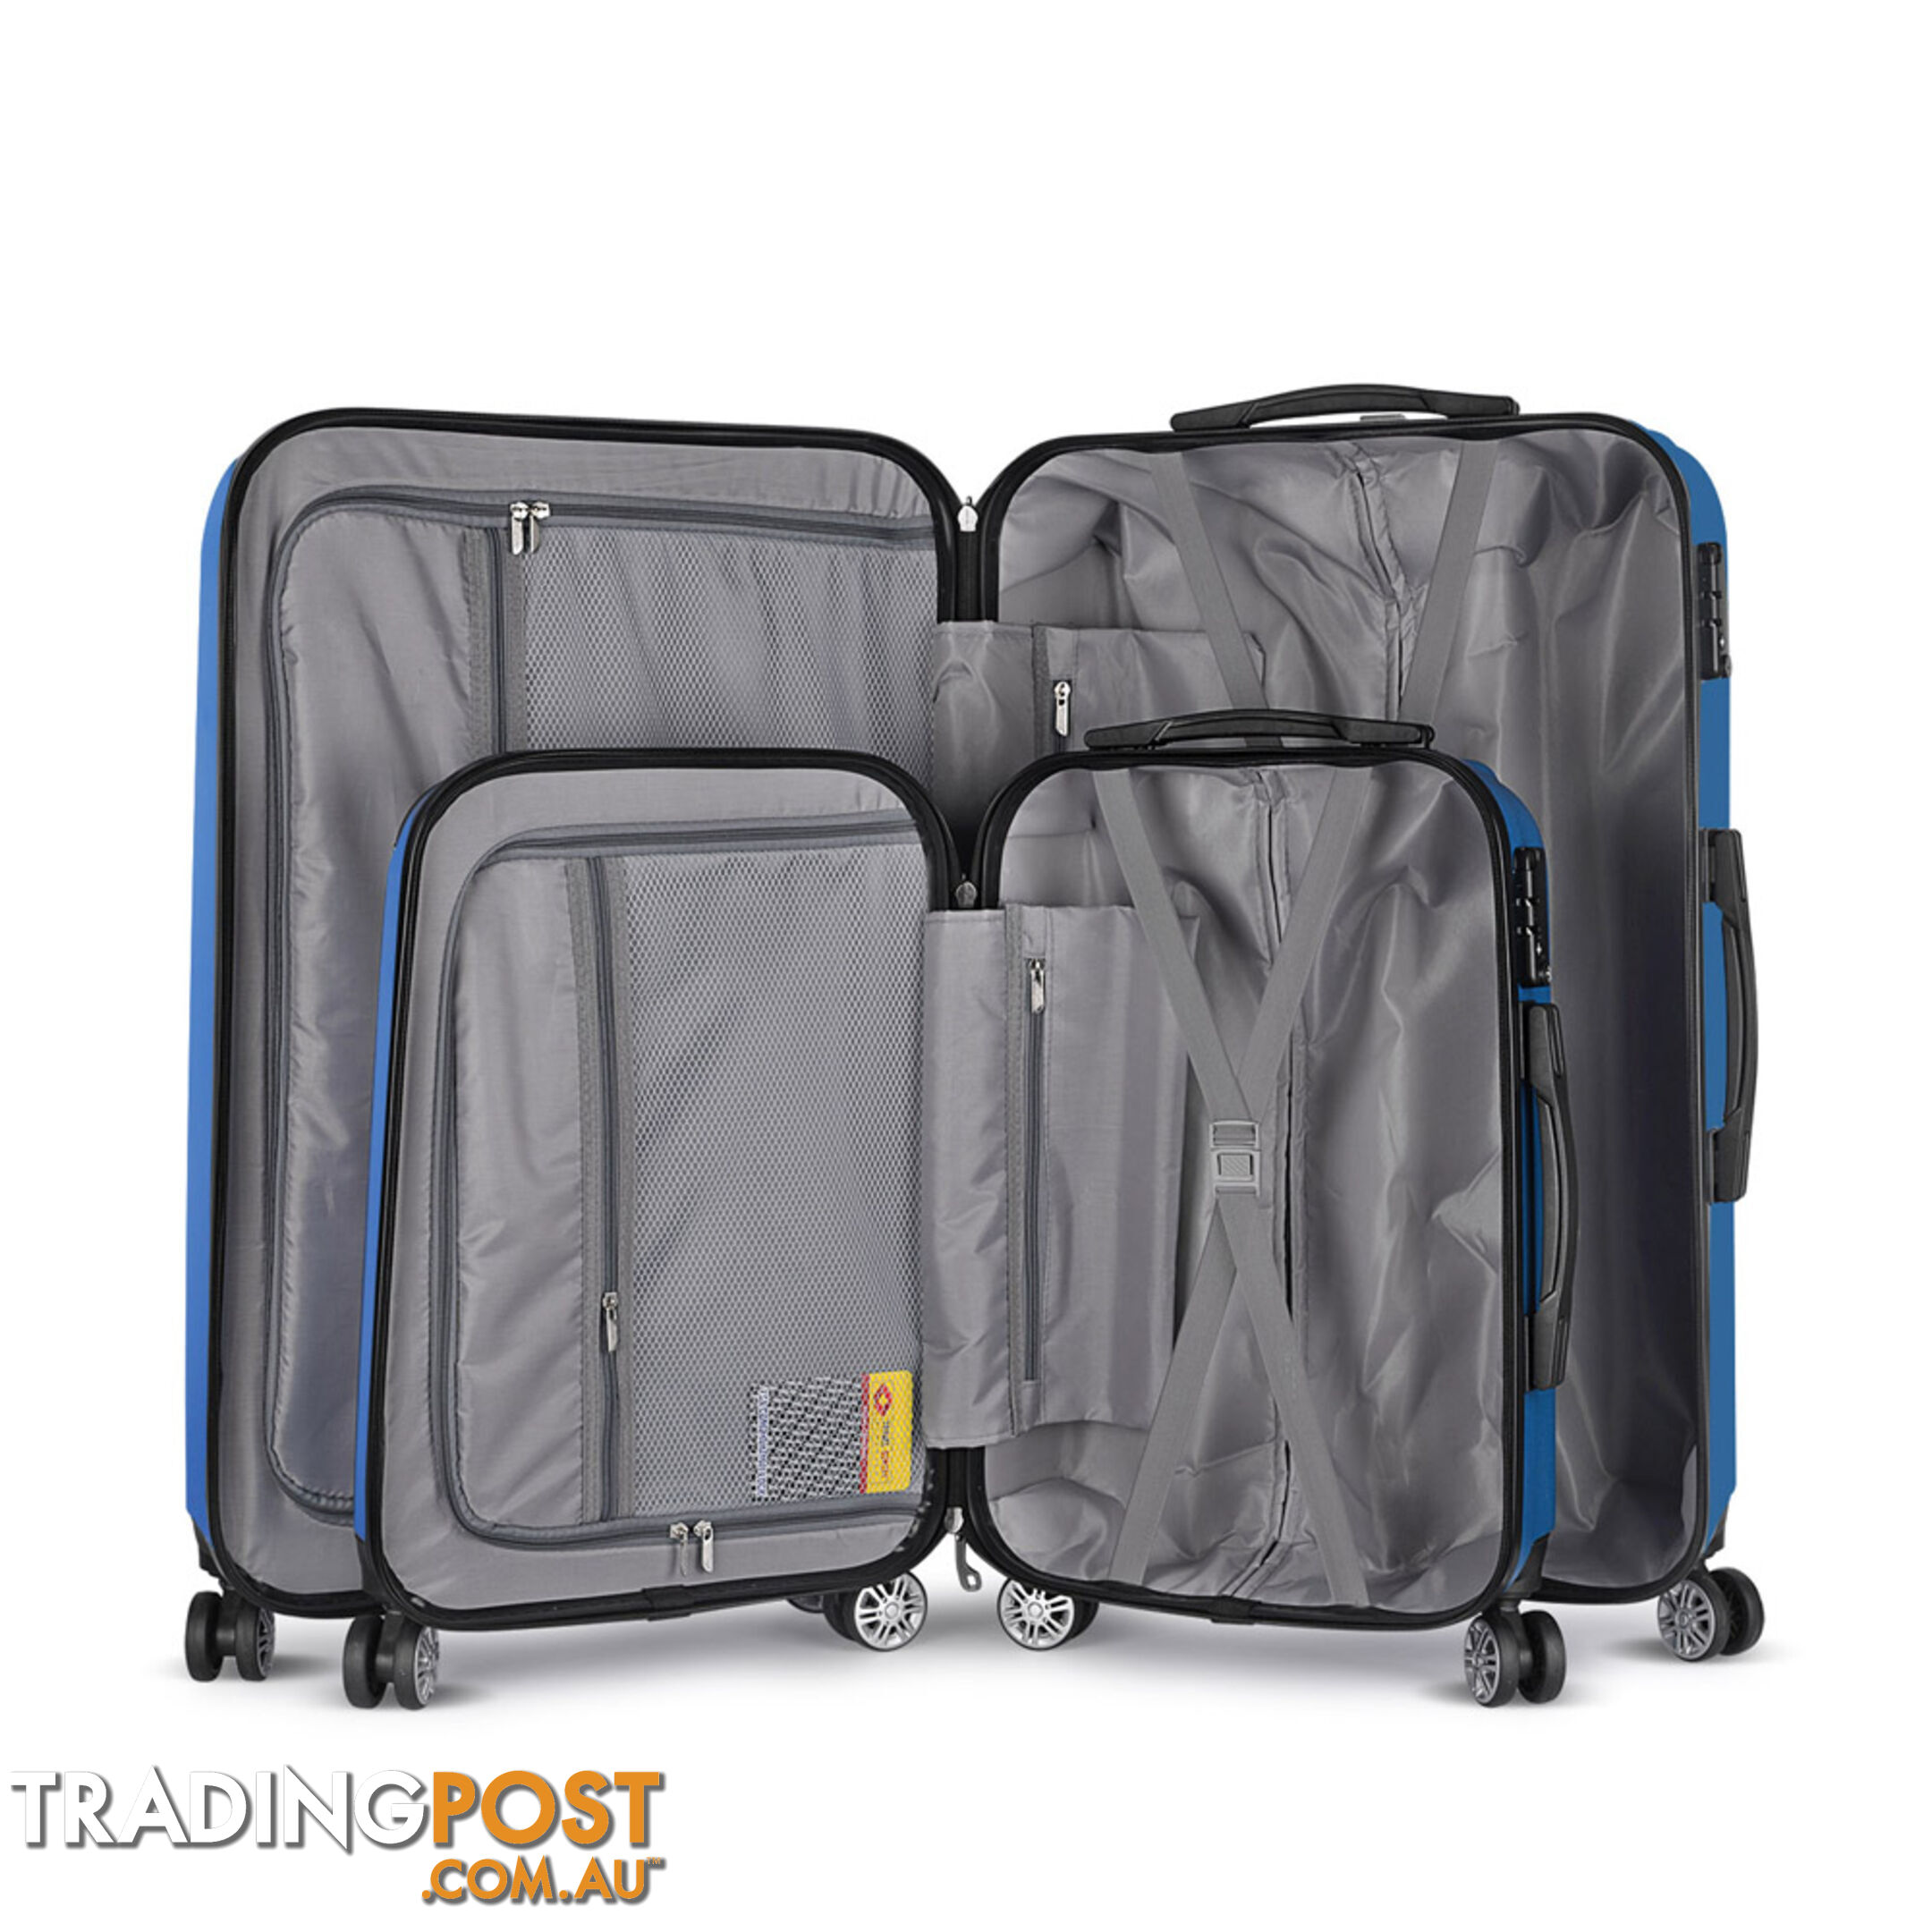 Set of 2 Hard Shell Travel Luggage with TSA Lock - Blue